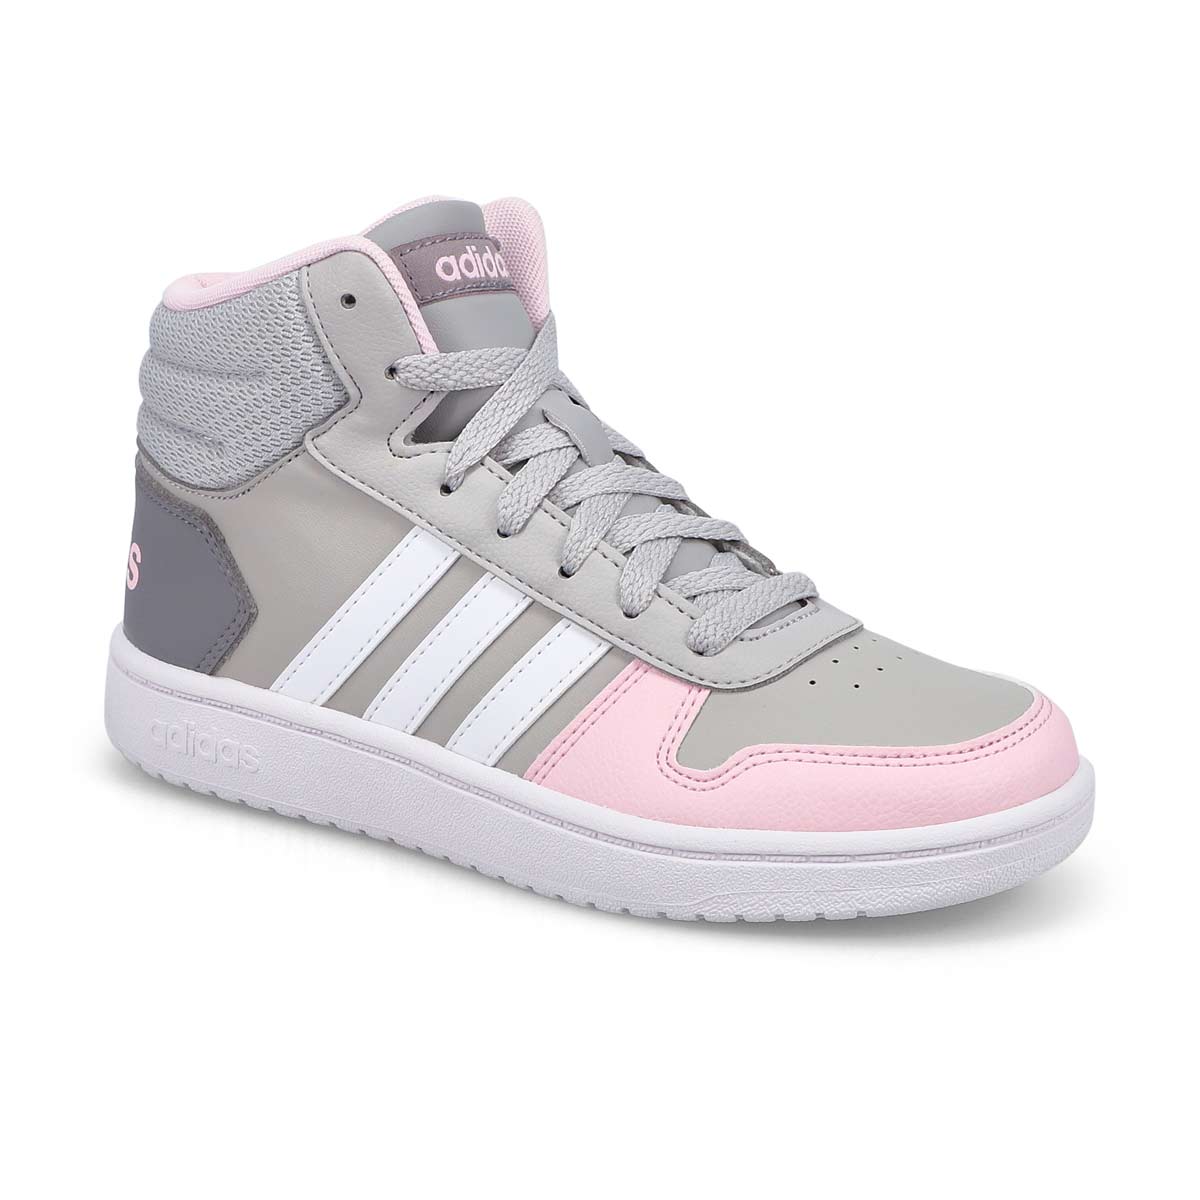 adidas Girls Hoops Mid 2.0 Sneaker - Grey/Whi | SoftMoc.com